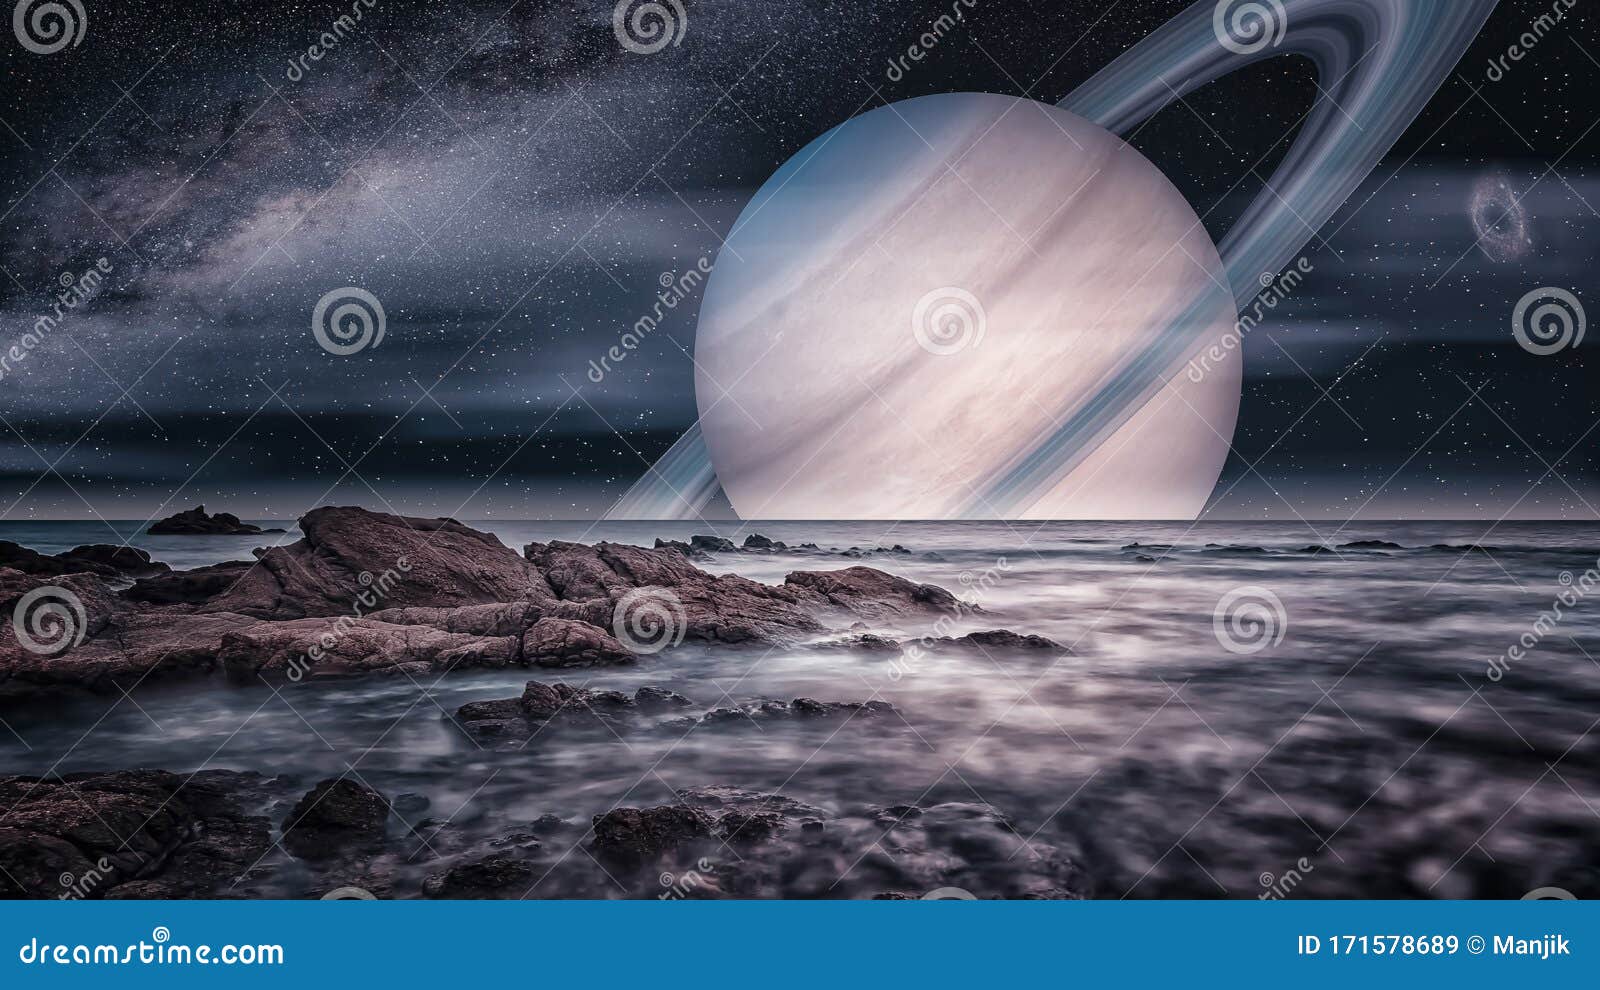 artist view of the saturn`s moon titan